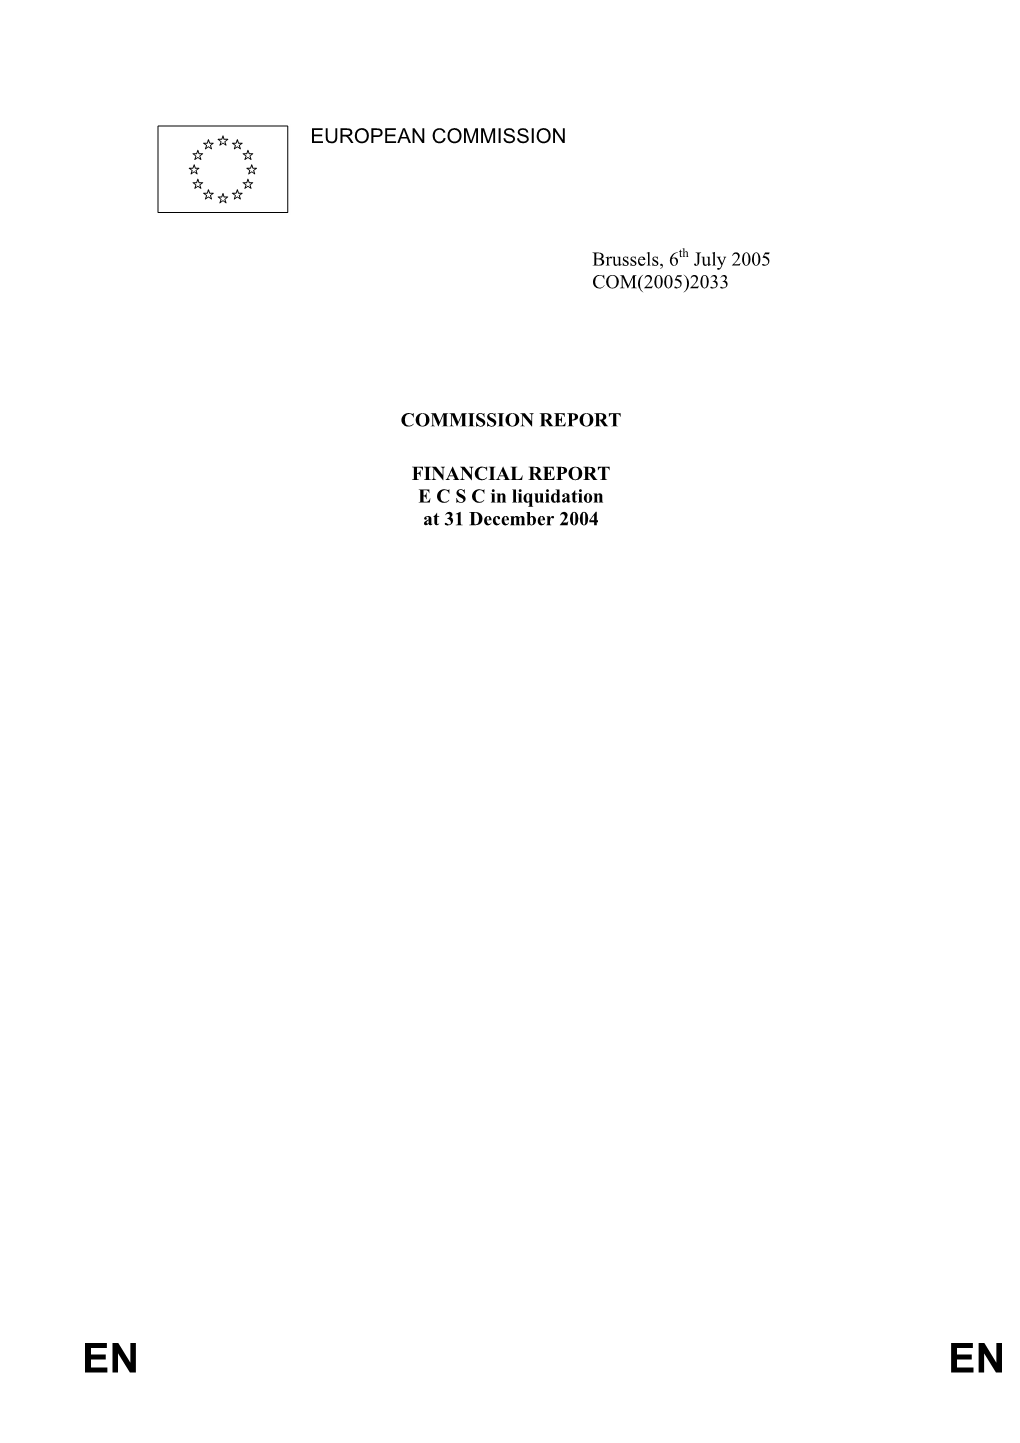 FINANCIAL REPORT E C S C in Liquidation at 31 December 2004